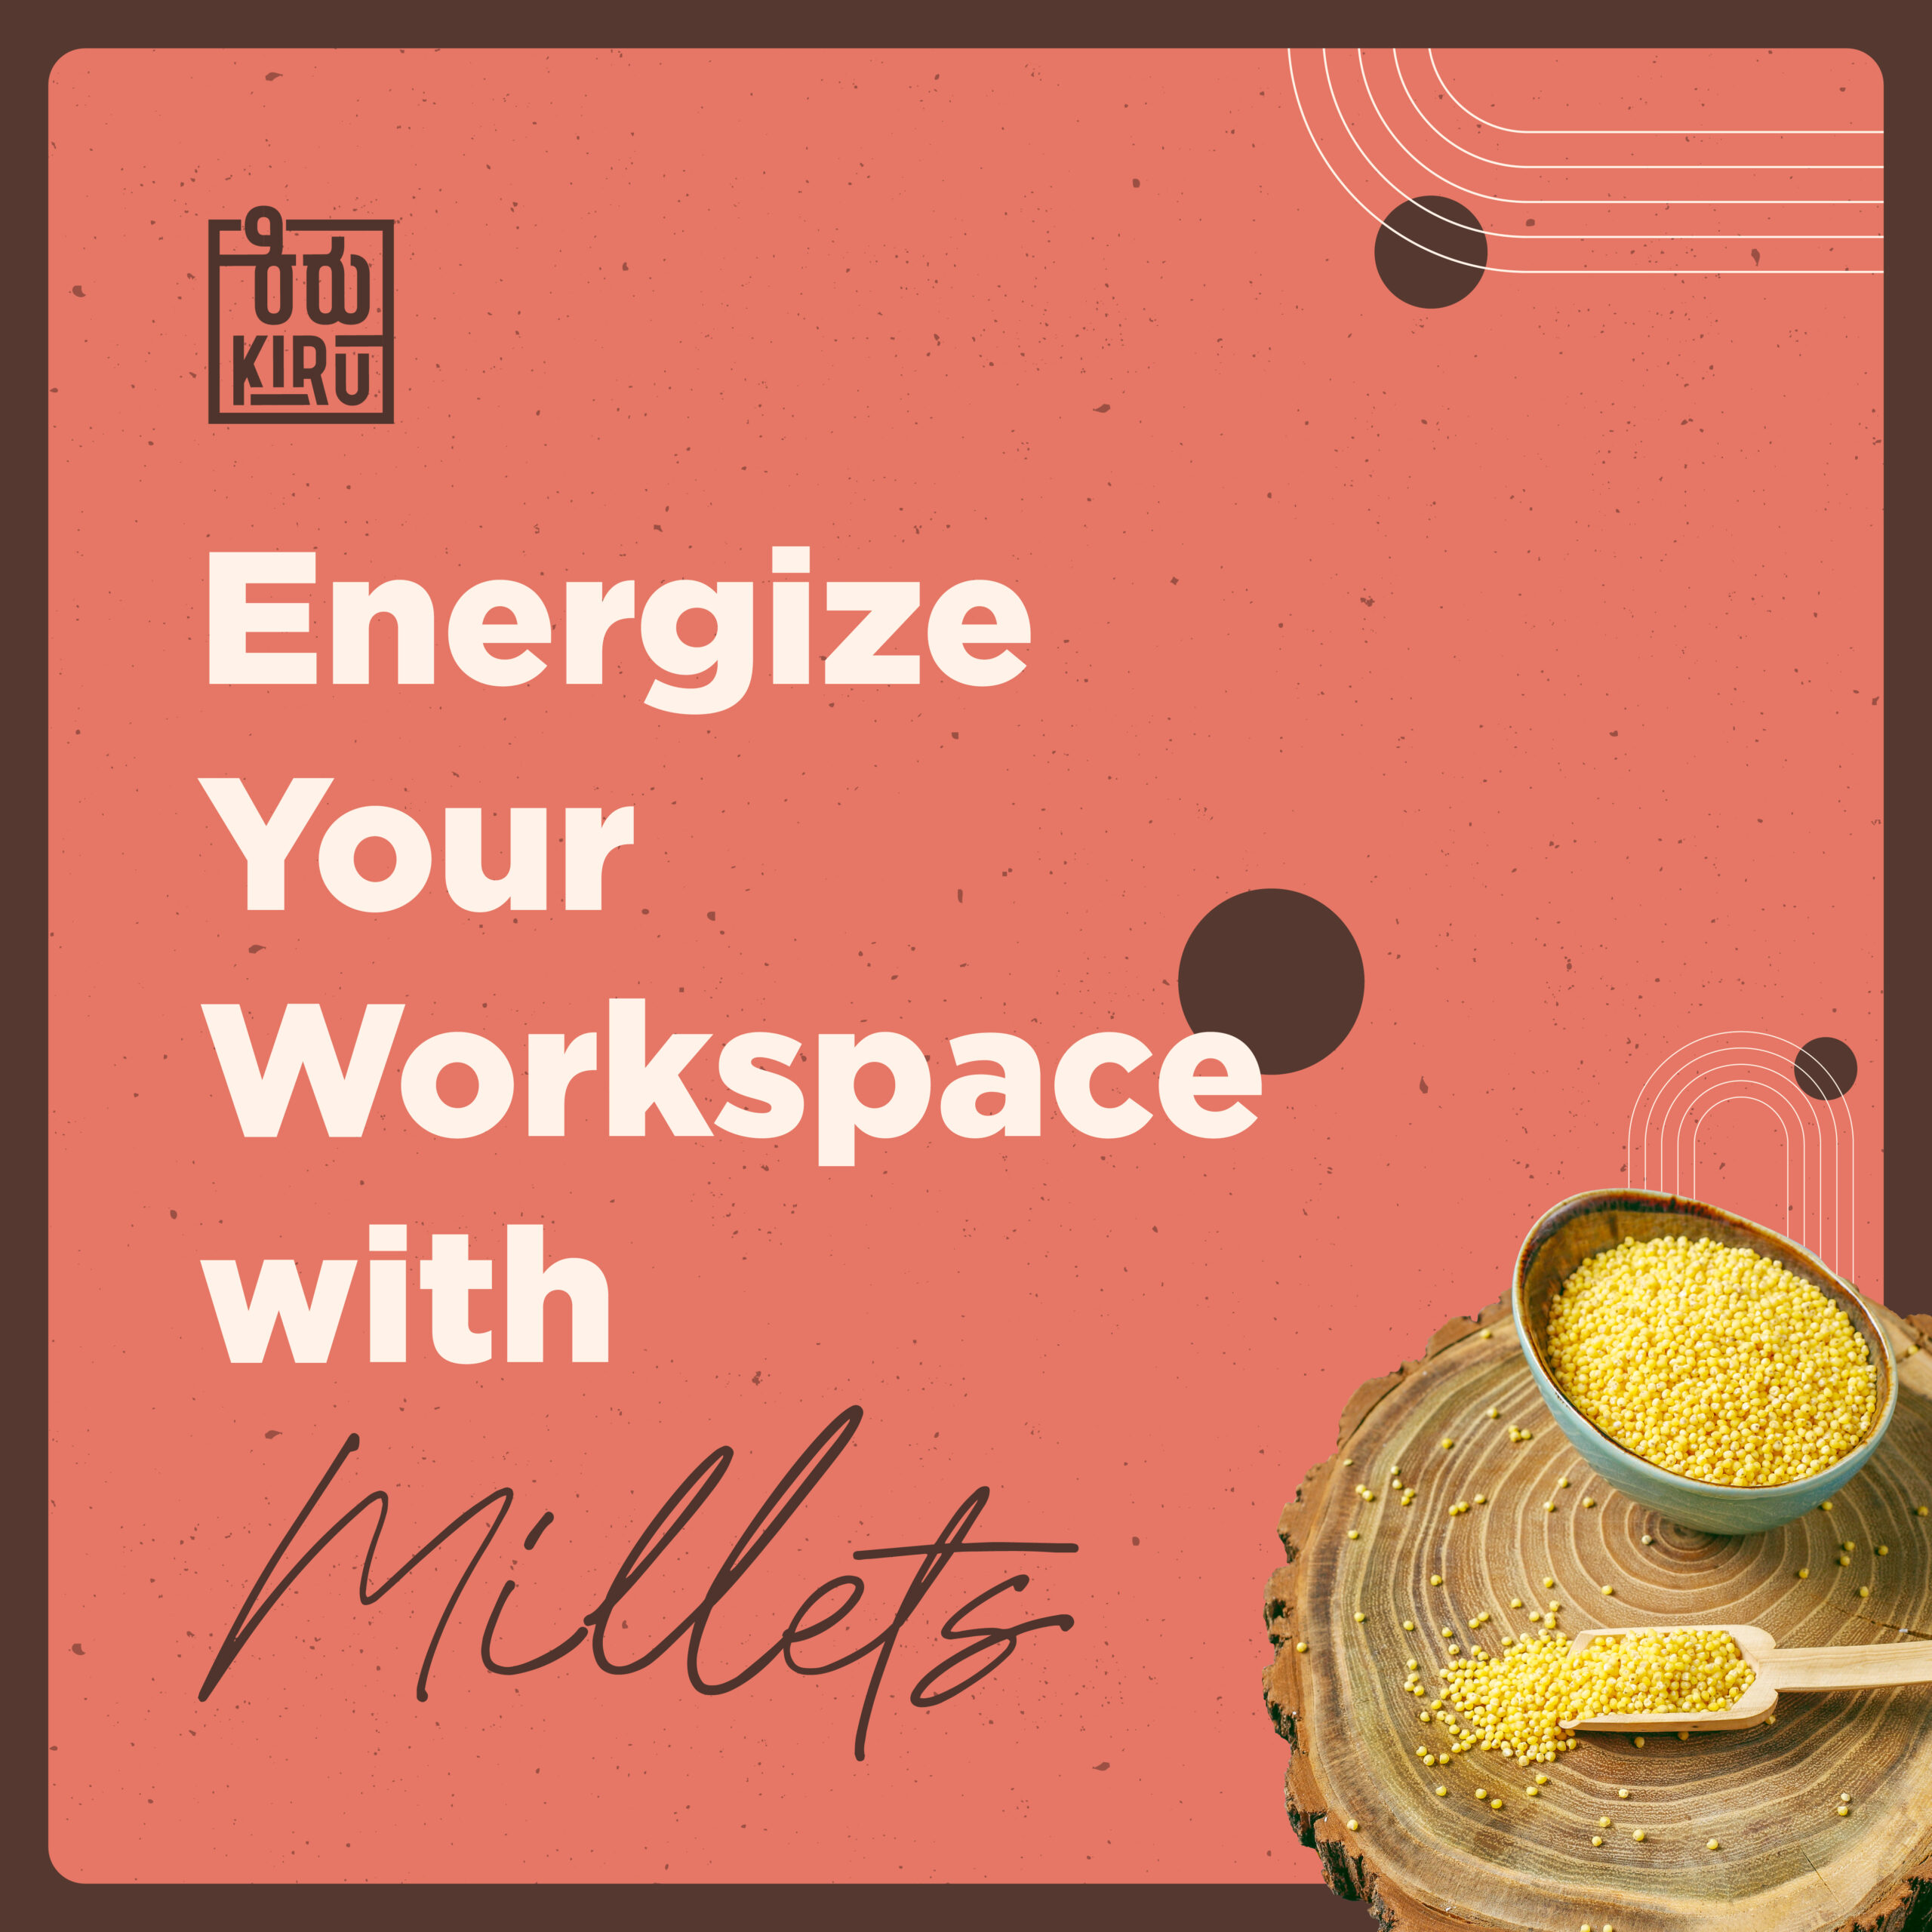 kiru millet snacks blogs on healthy office snacks